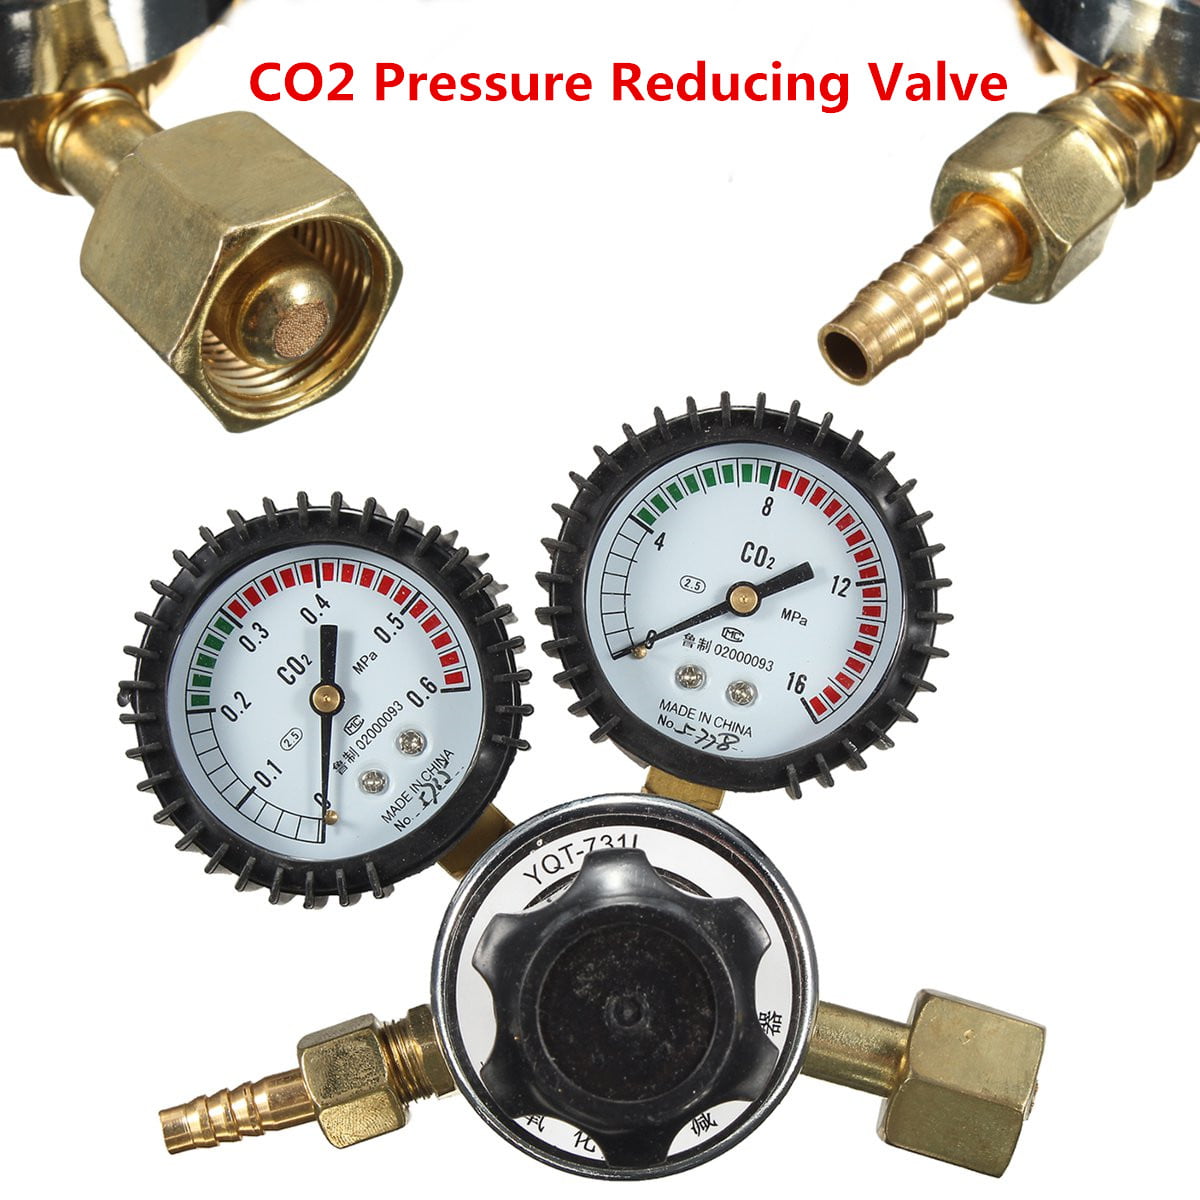 Gas Regulator Analog Valves Metal Pressure Accessories Welding Practical 